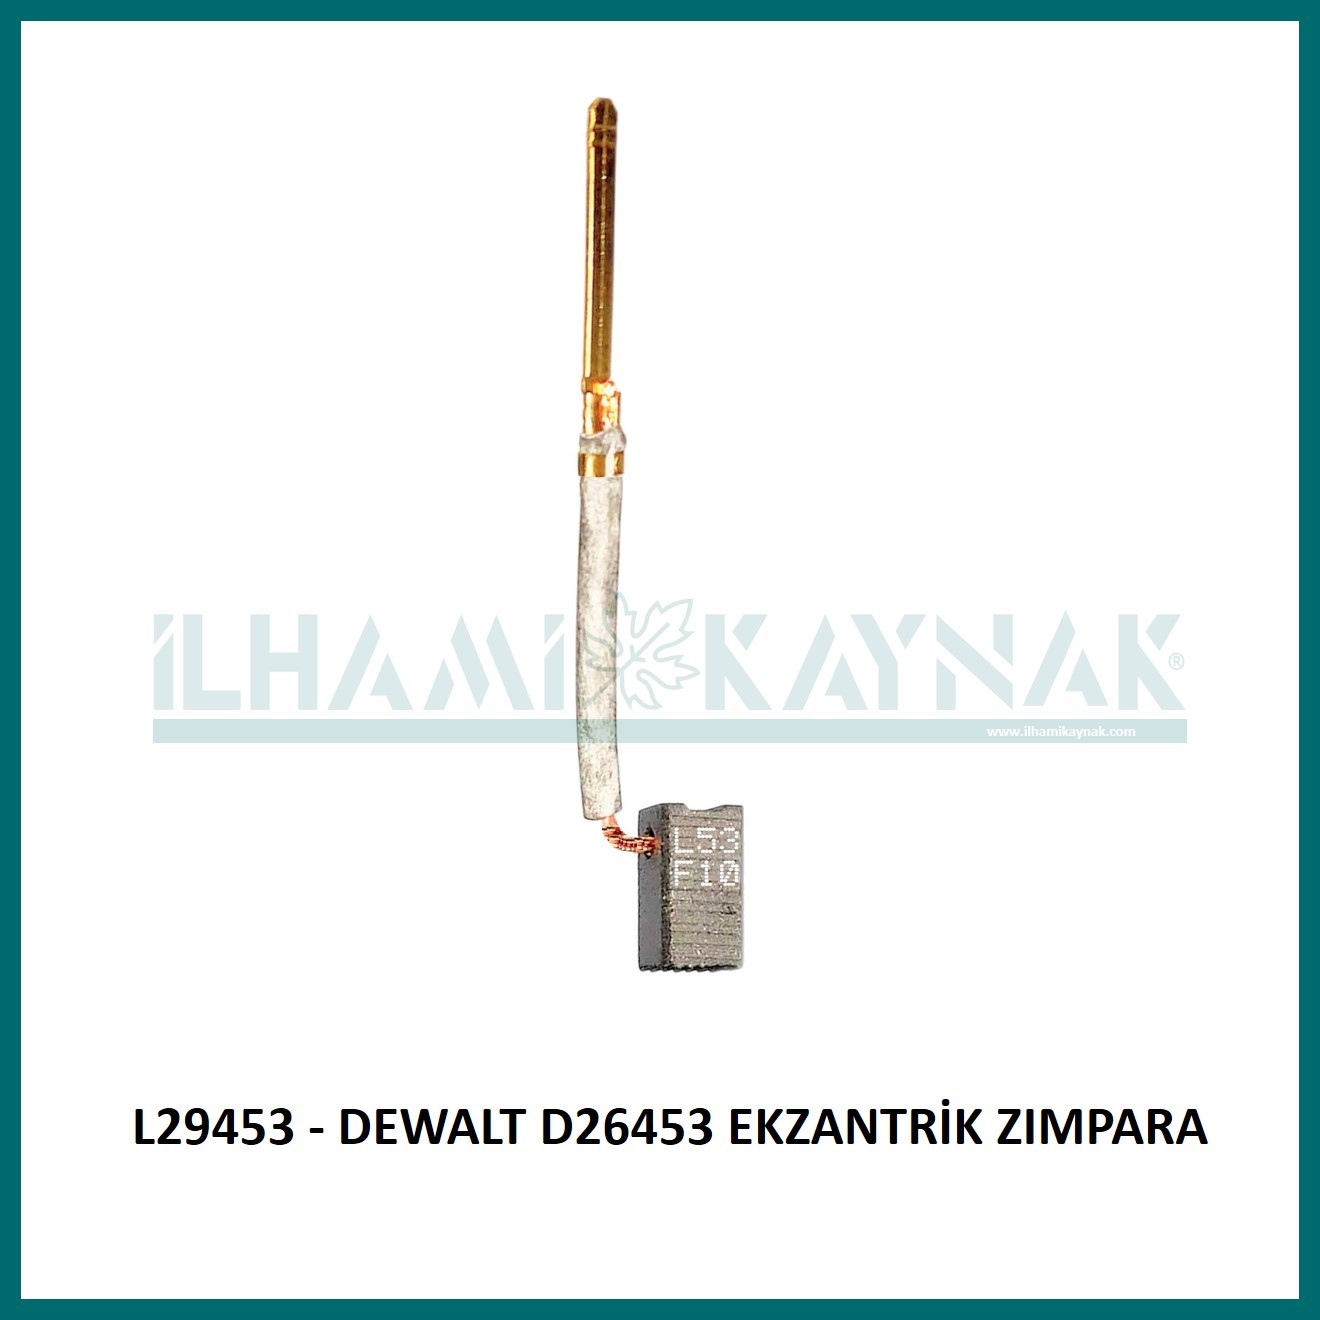 L29453 - DEWALT D26453 EKZANTRİK ZIMPARA - 6*7*13 mm - 100 Adet